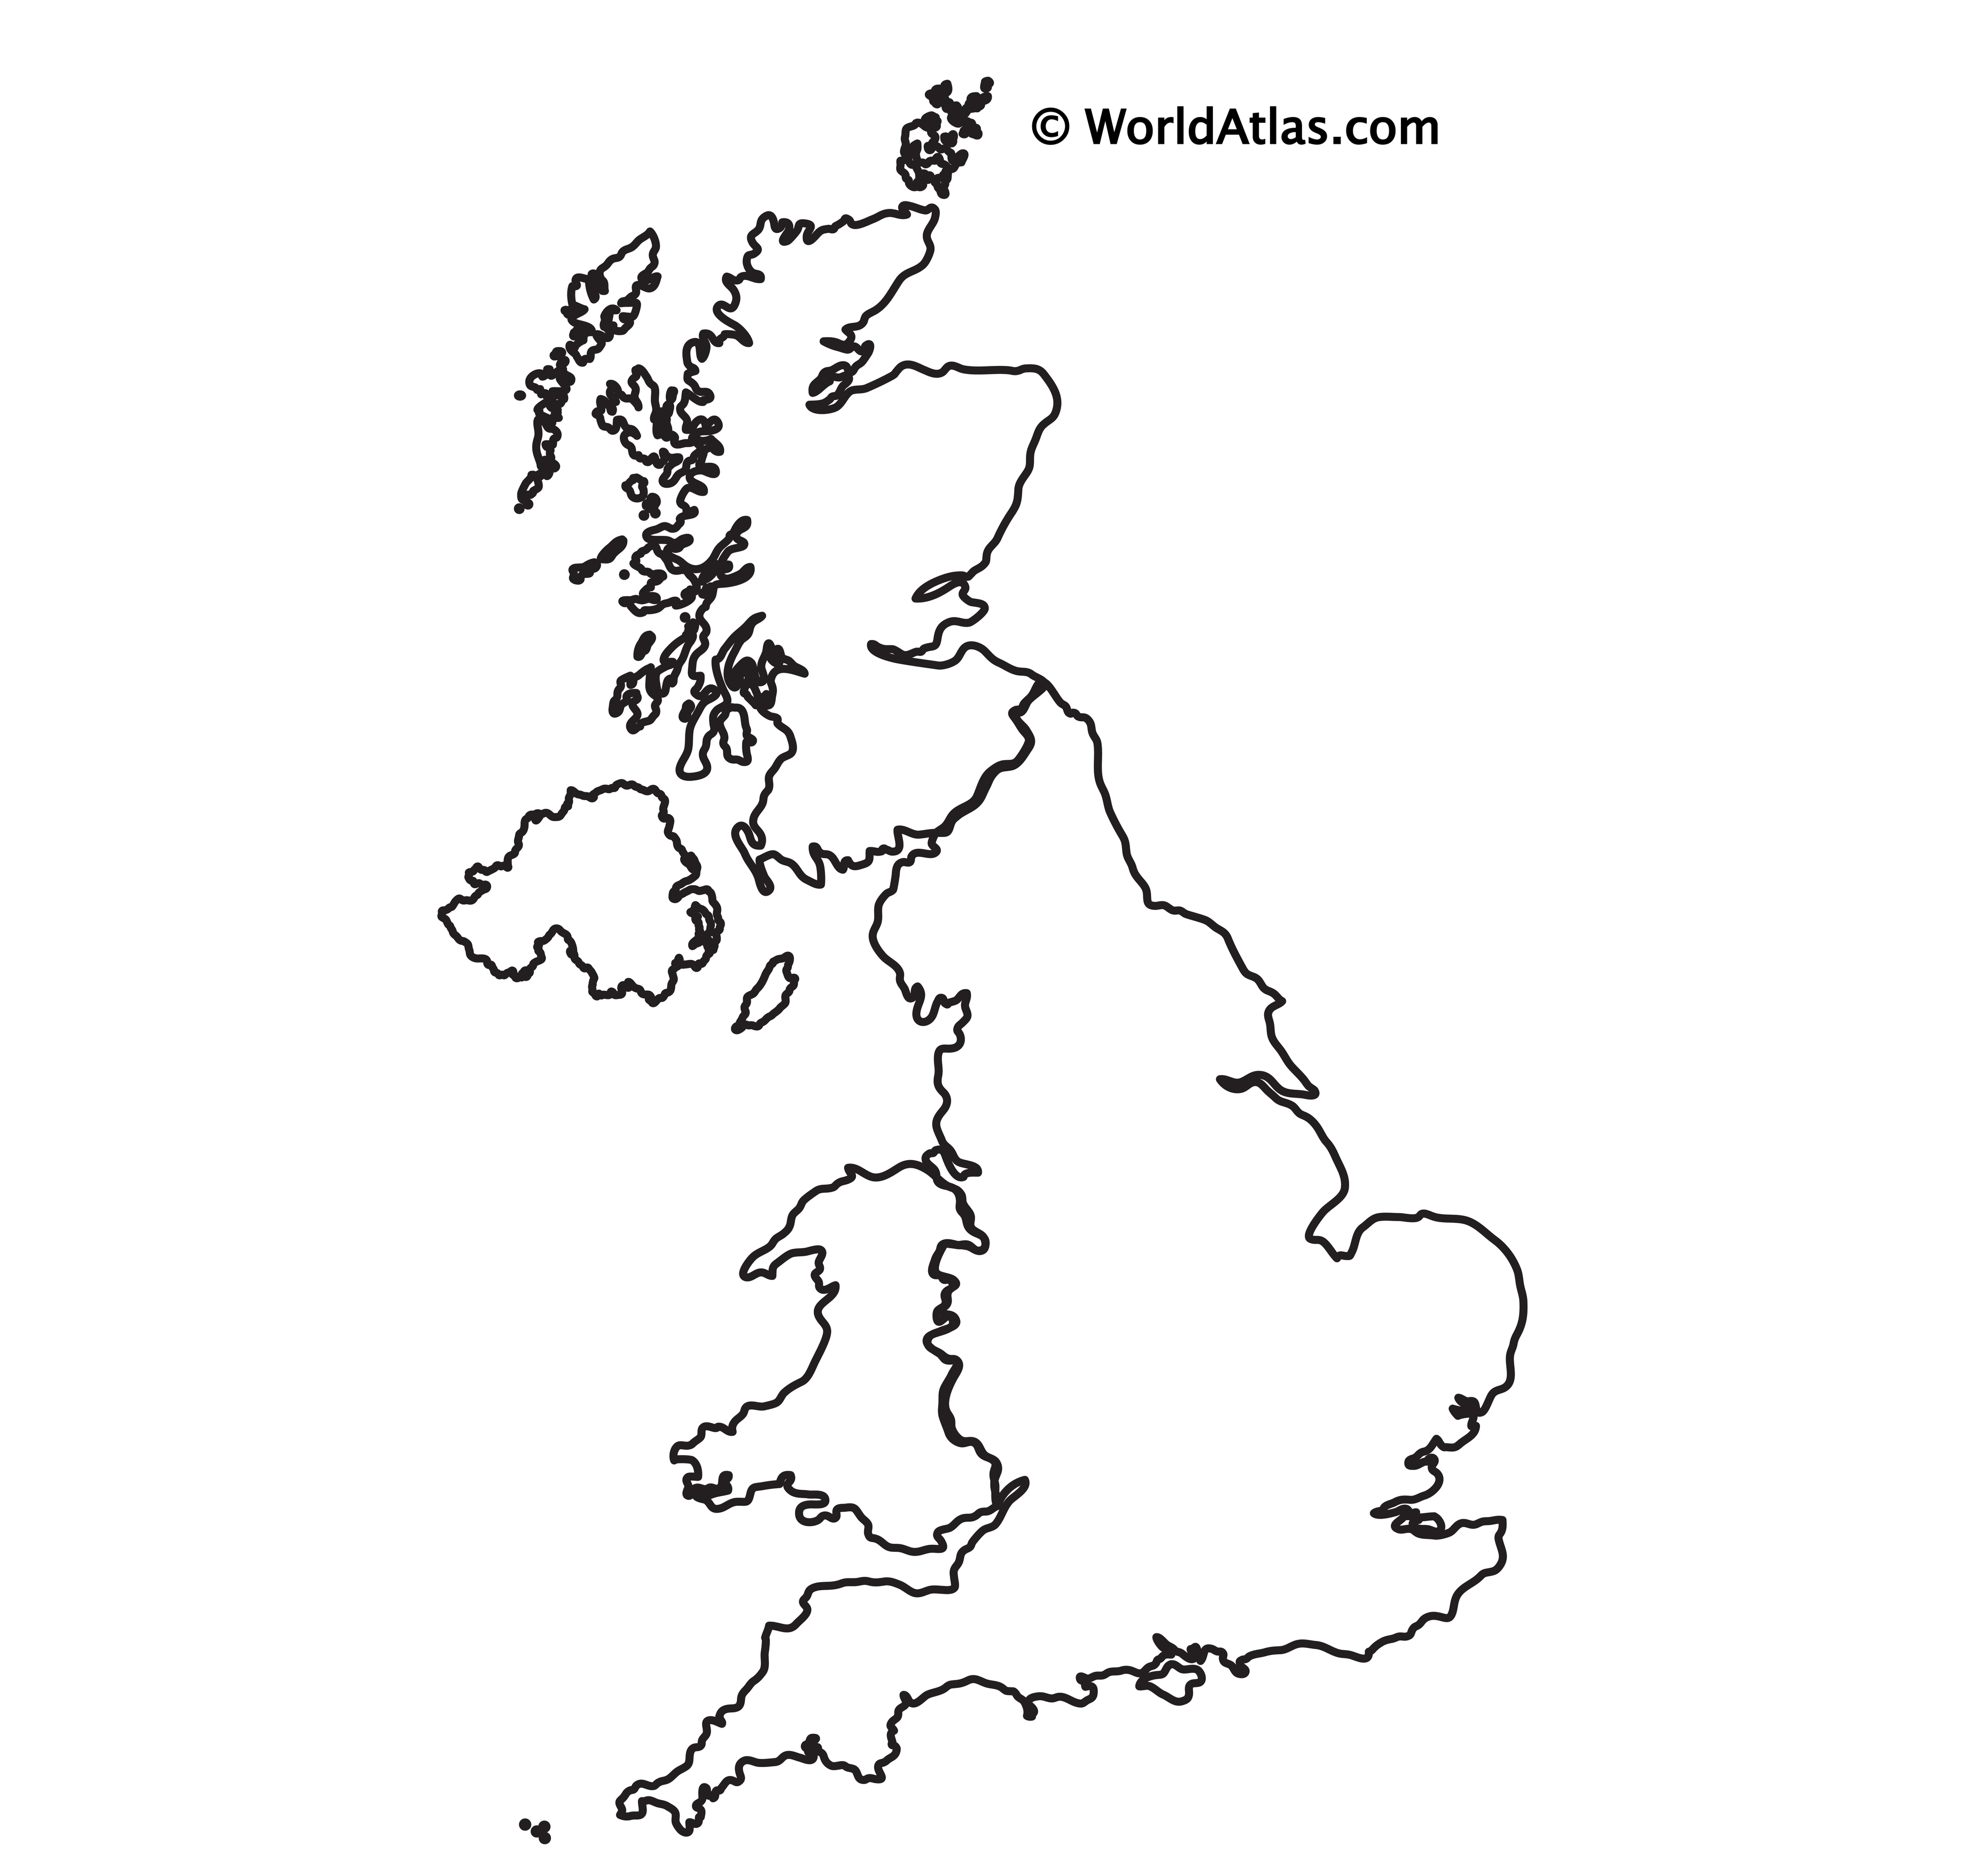 The United Kingdom Maps & Facts - World Atlas